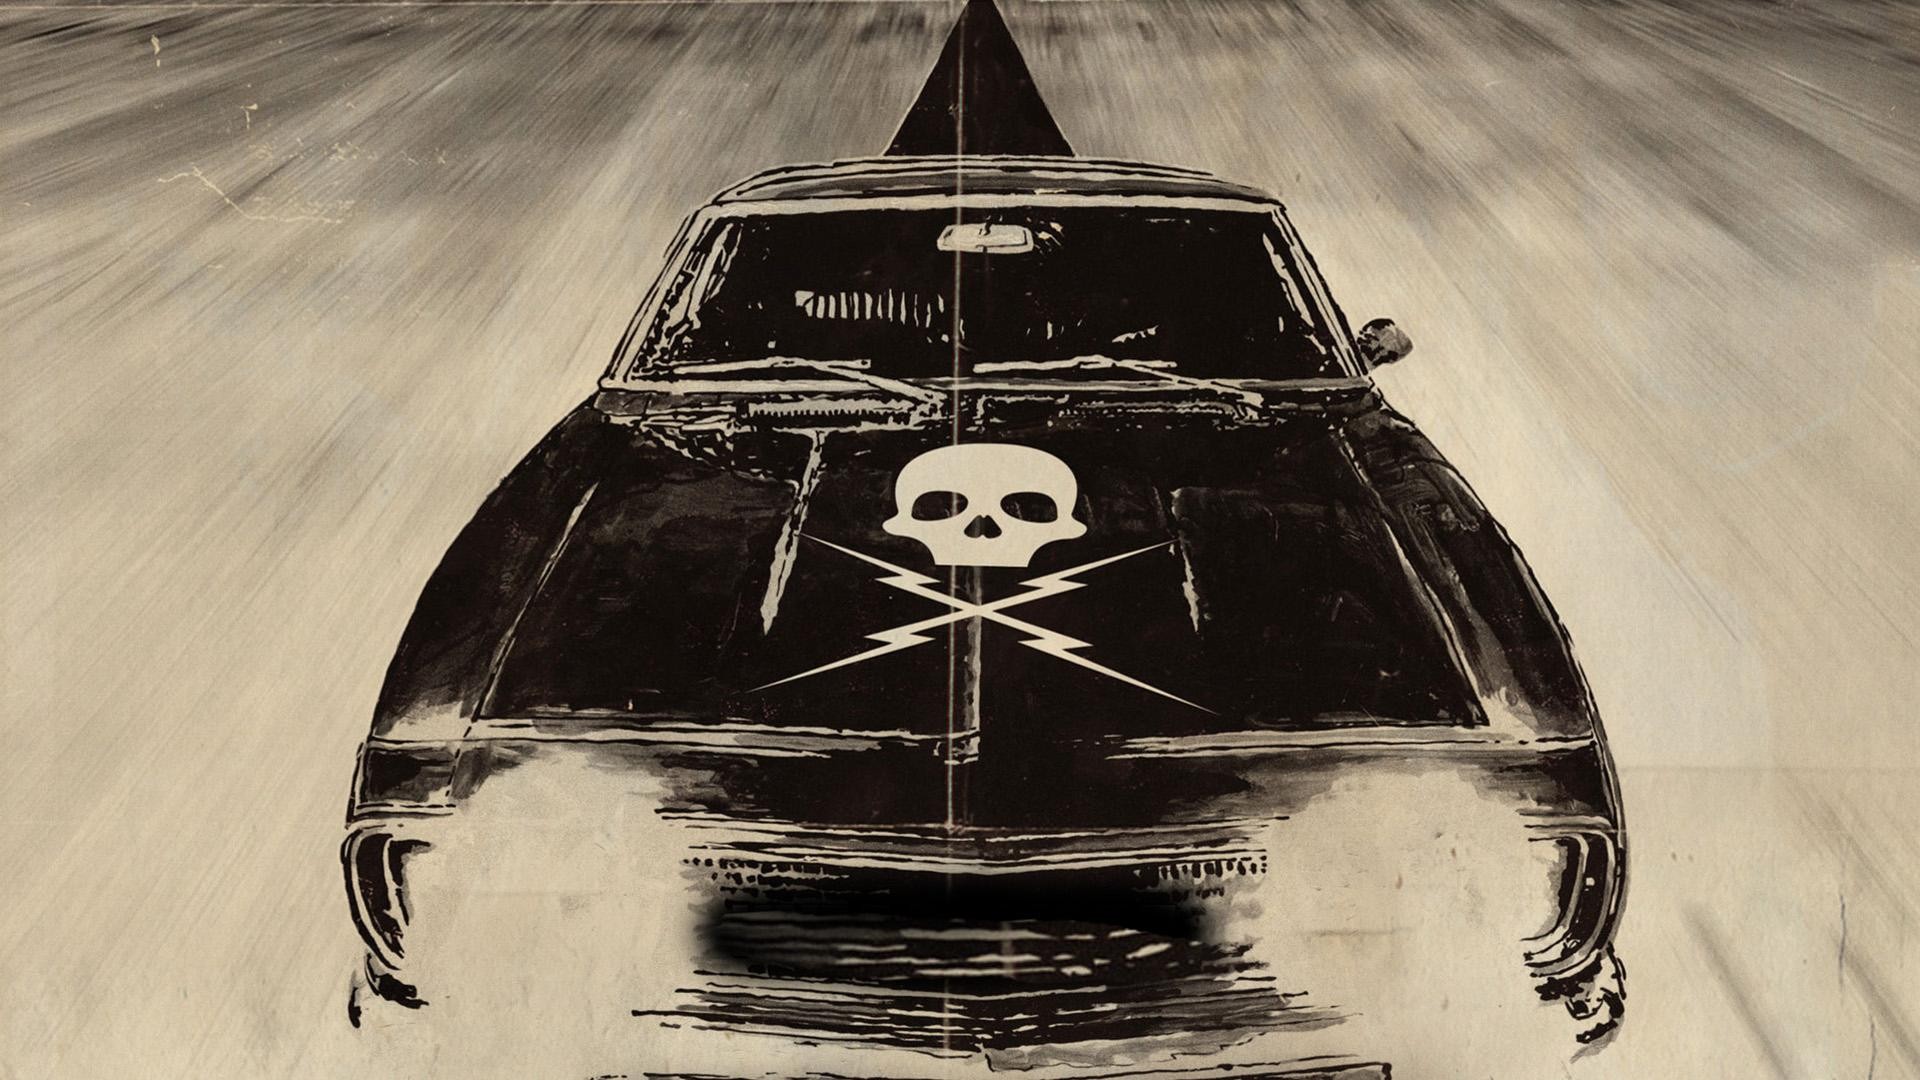 Movies Death Proof Skull Car Muscle Cars Grindhouse Digital Art Beige 1920x1080